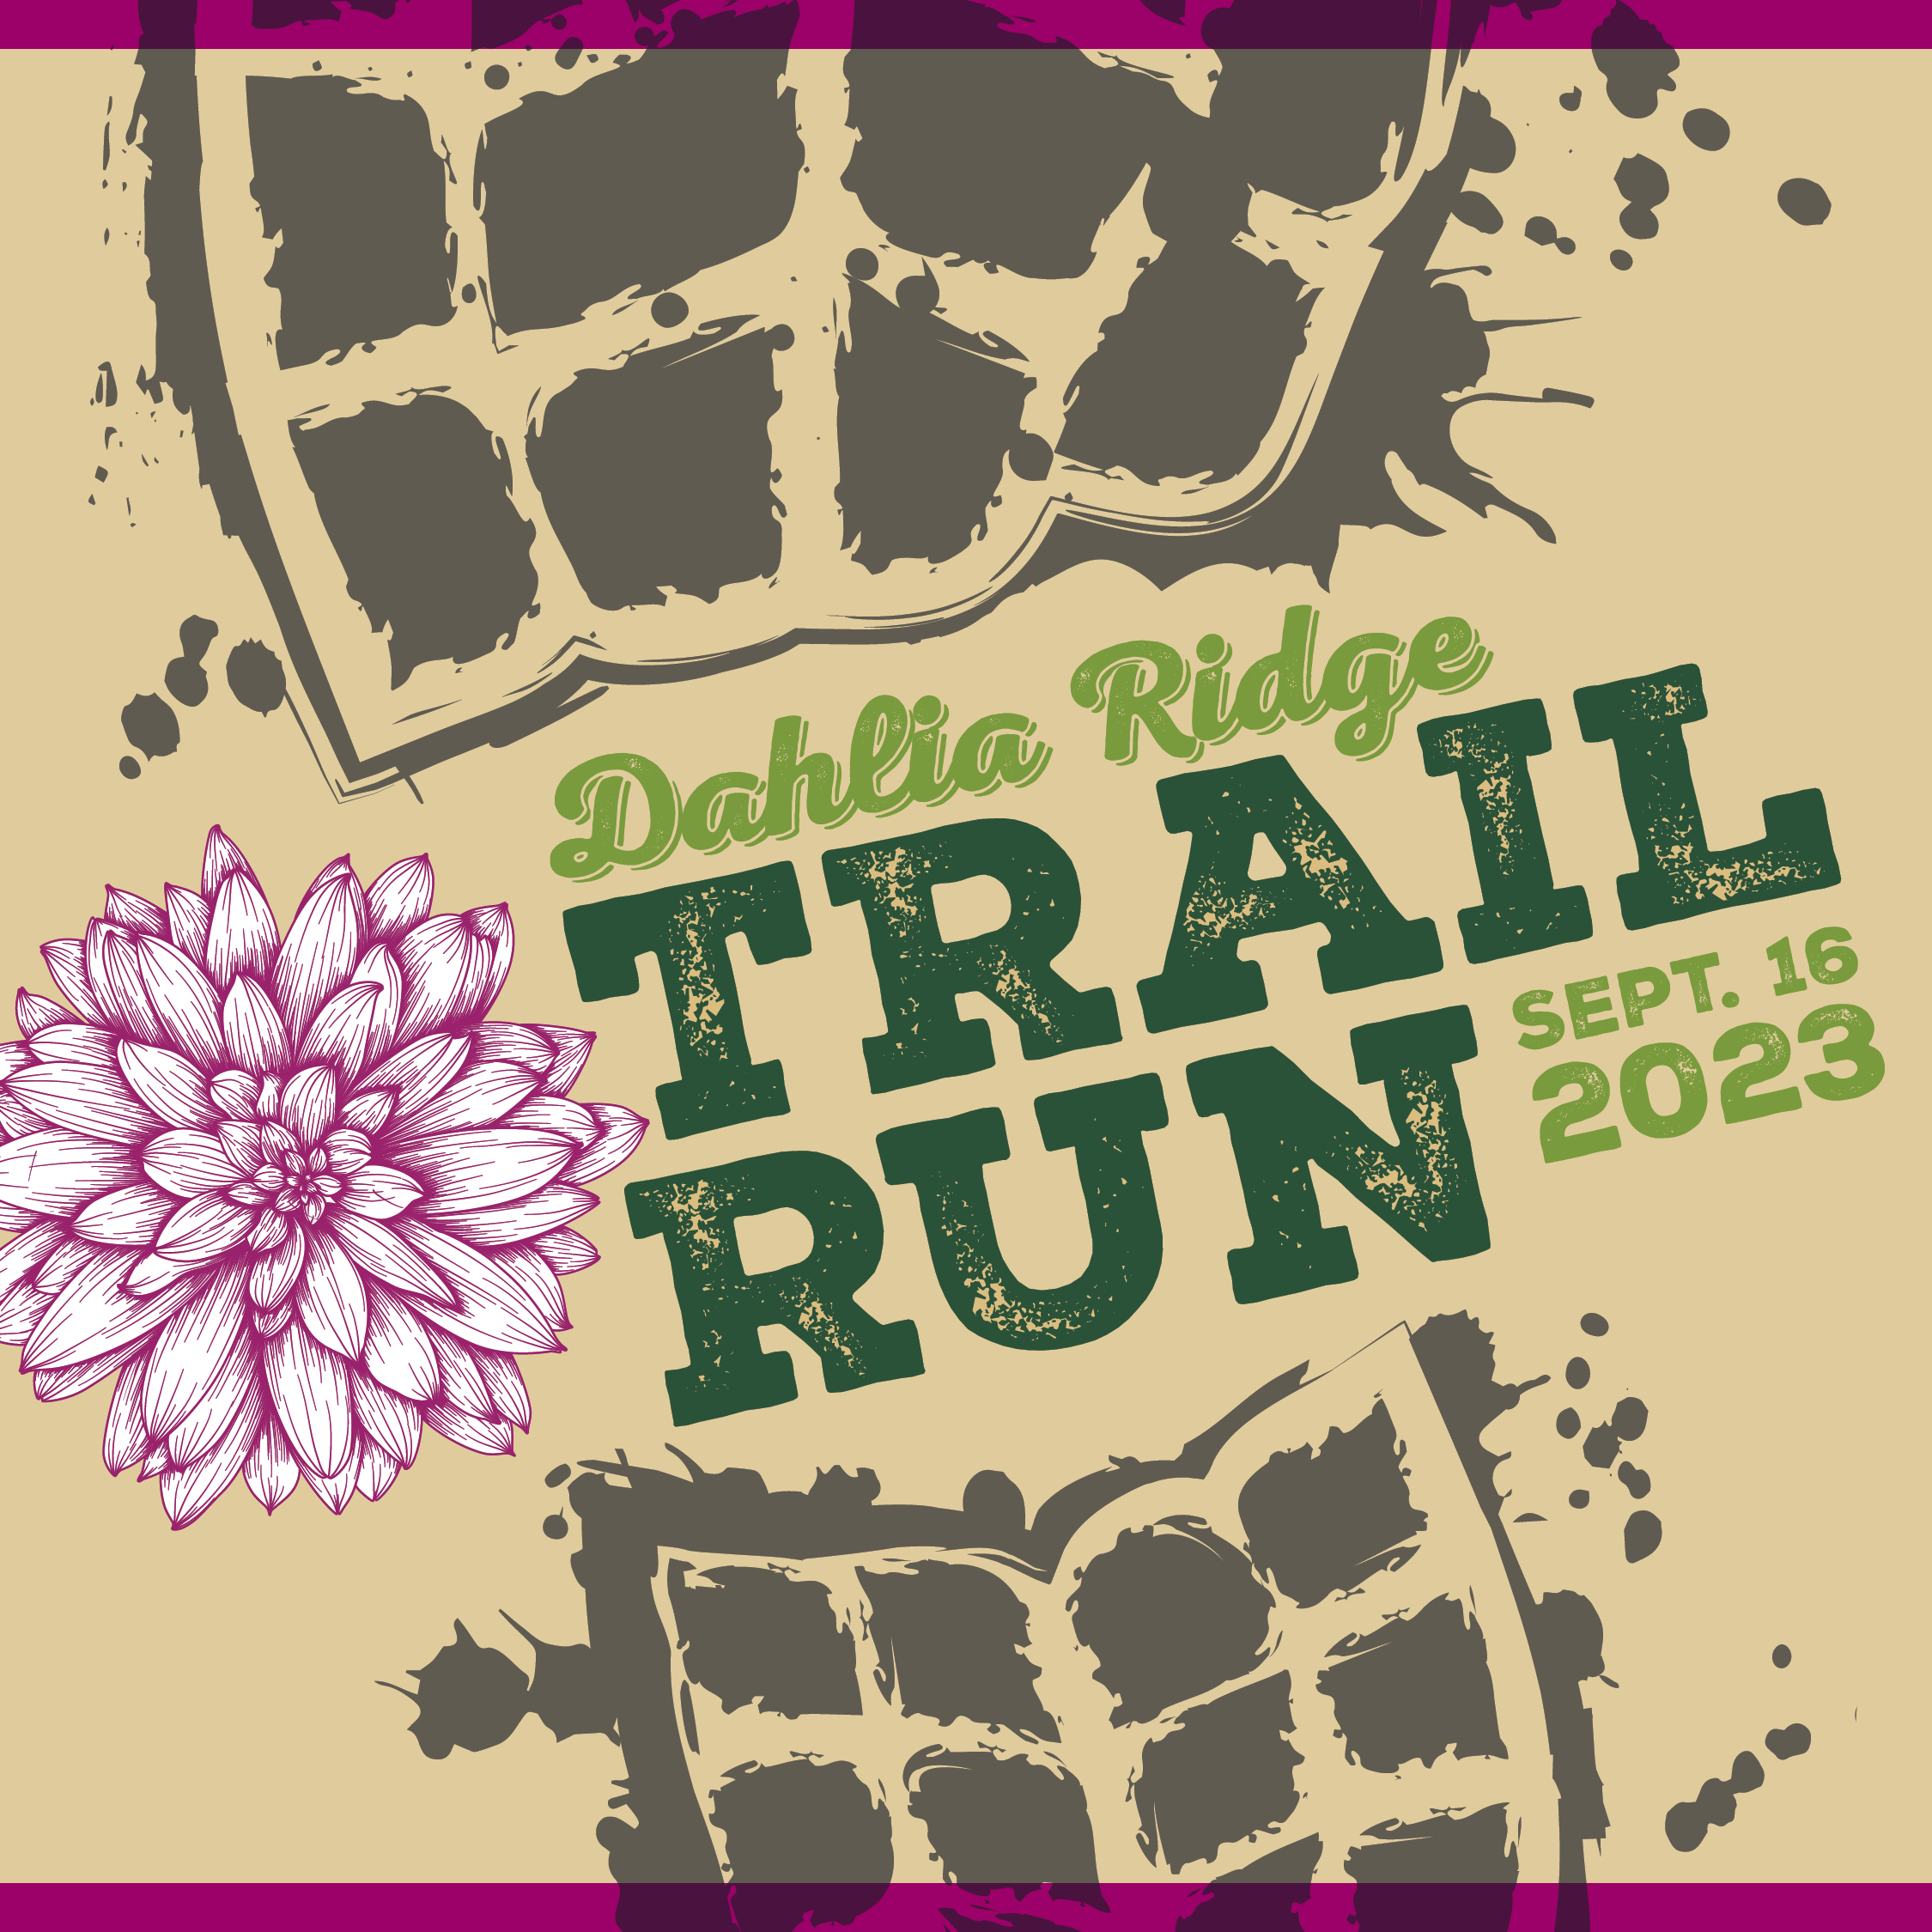 Bootprint with Dahlia image and Dahlia Ridge Trail Run Sept. 16